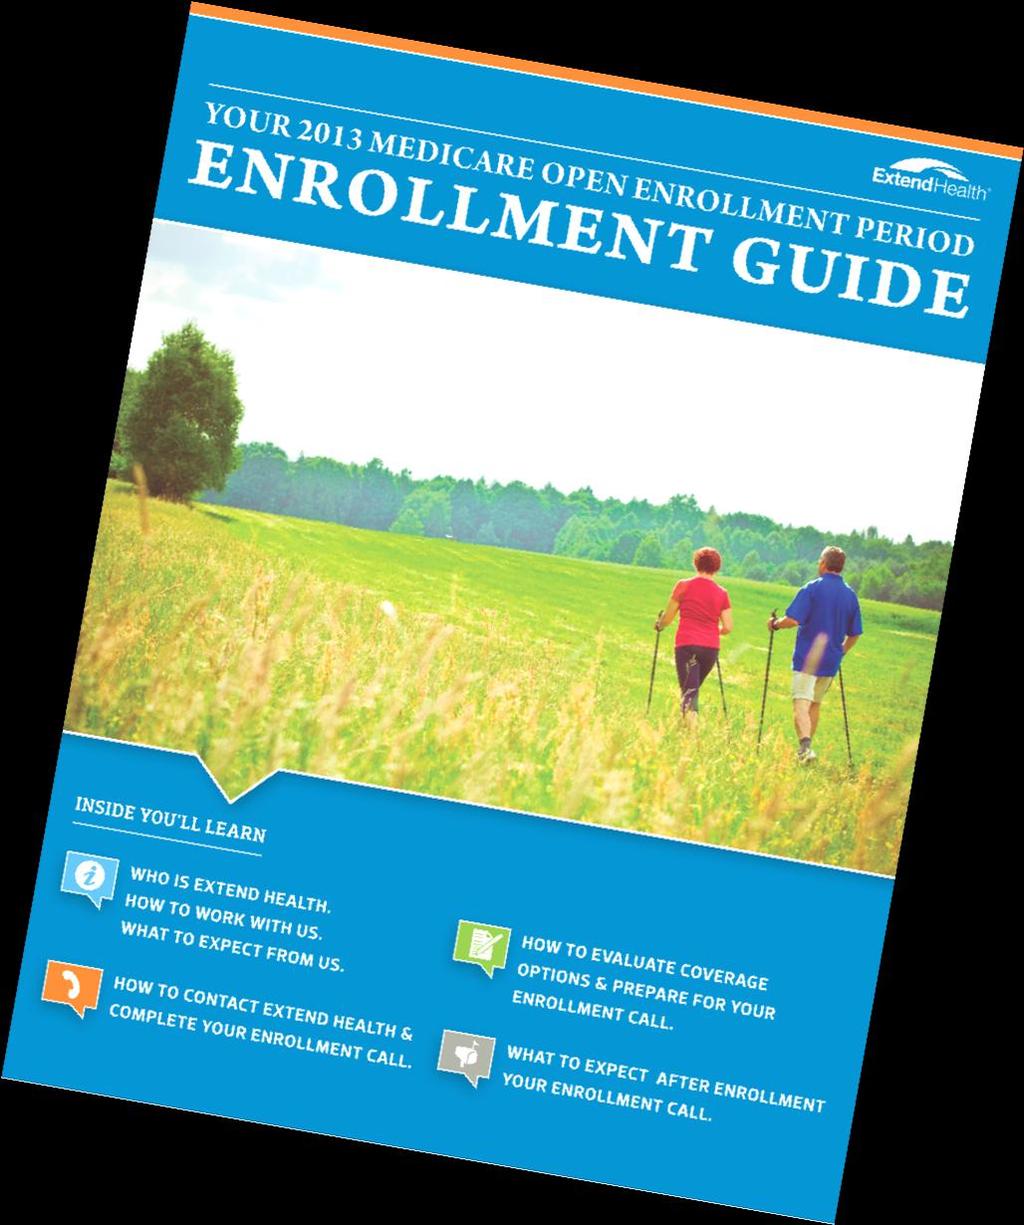 Education Enrollment Guide Prepare you for enrollment